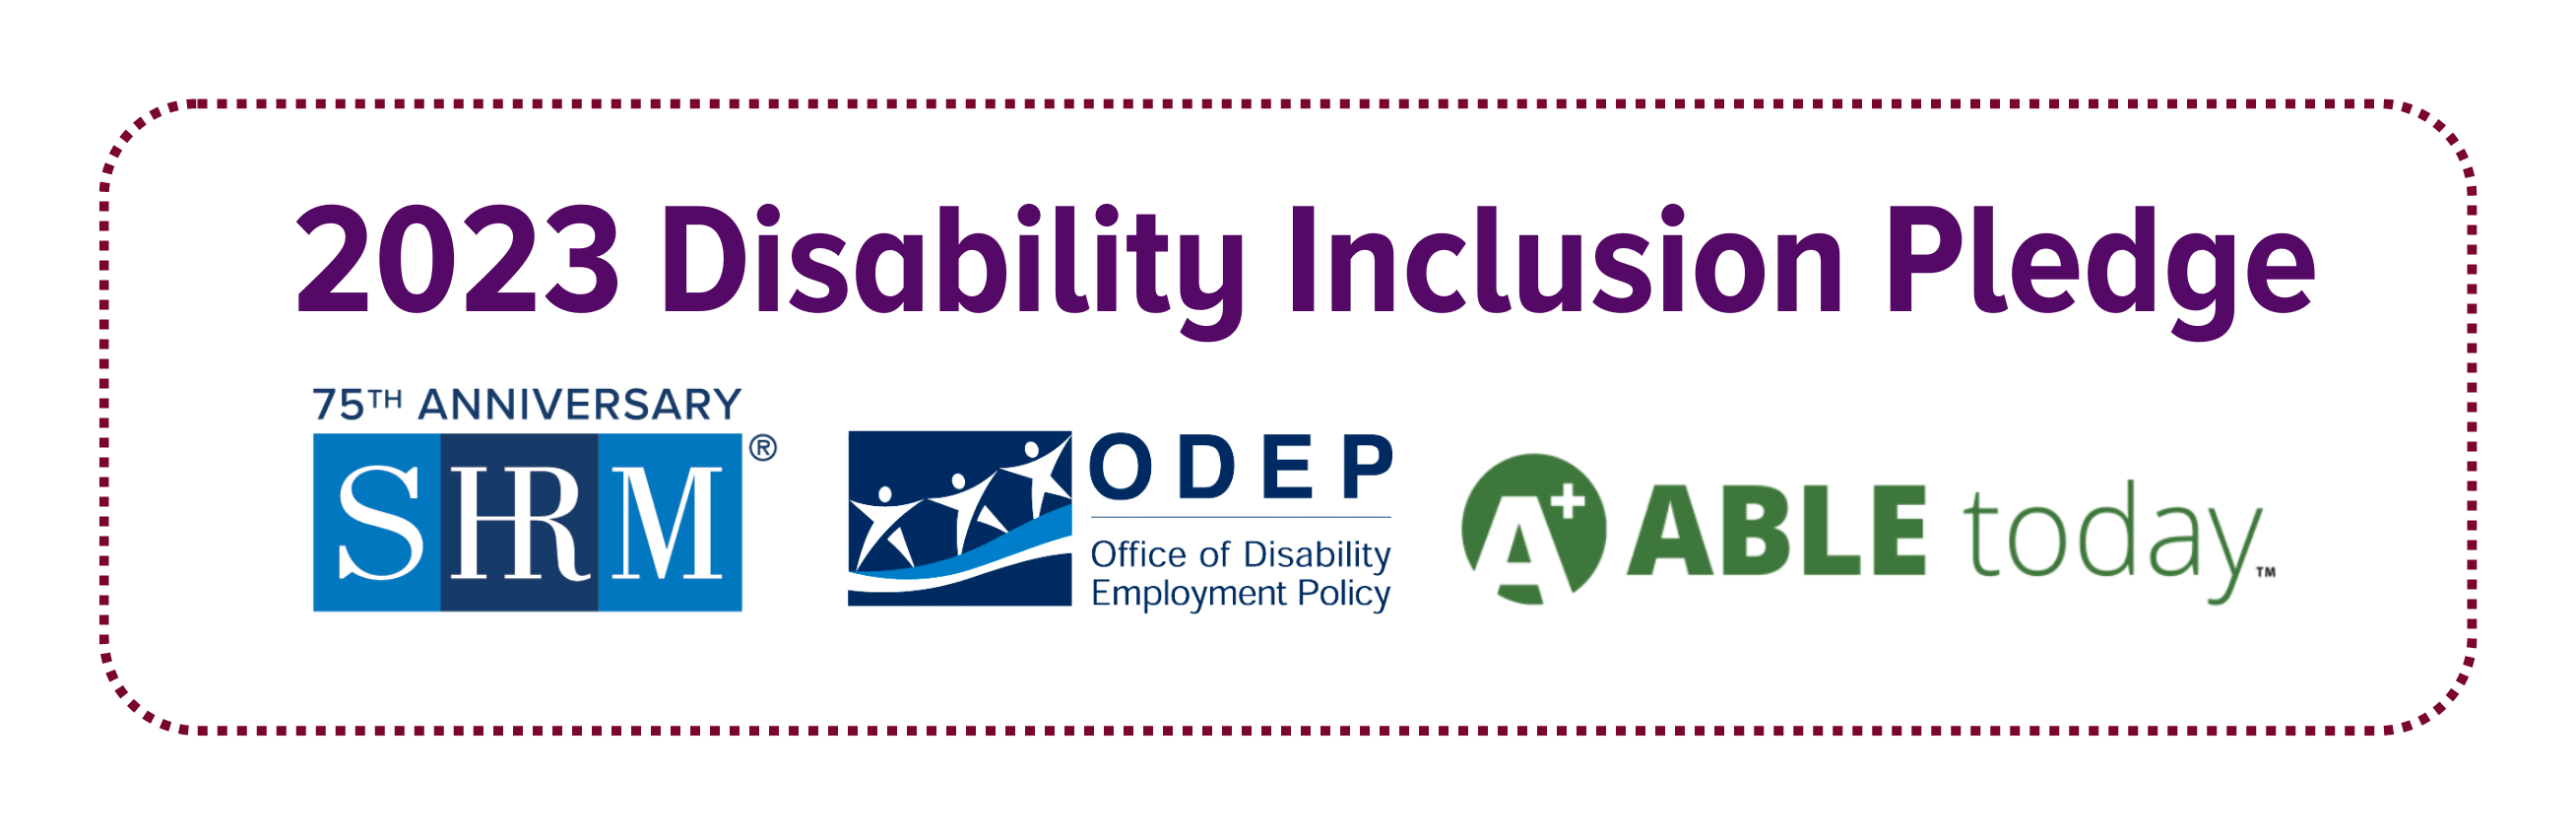 2023 Disability Inclusion Pledge Logo